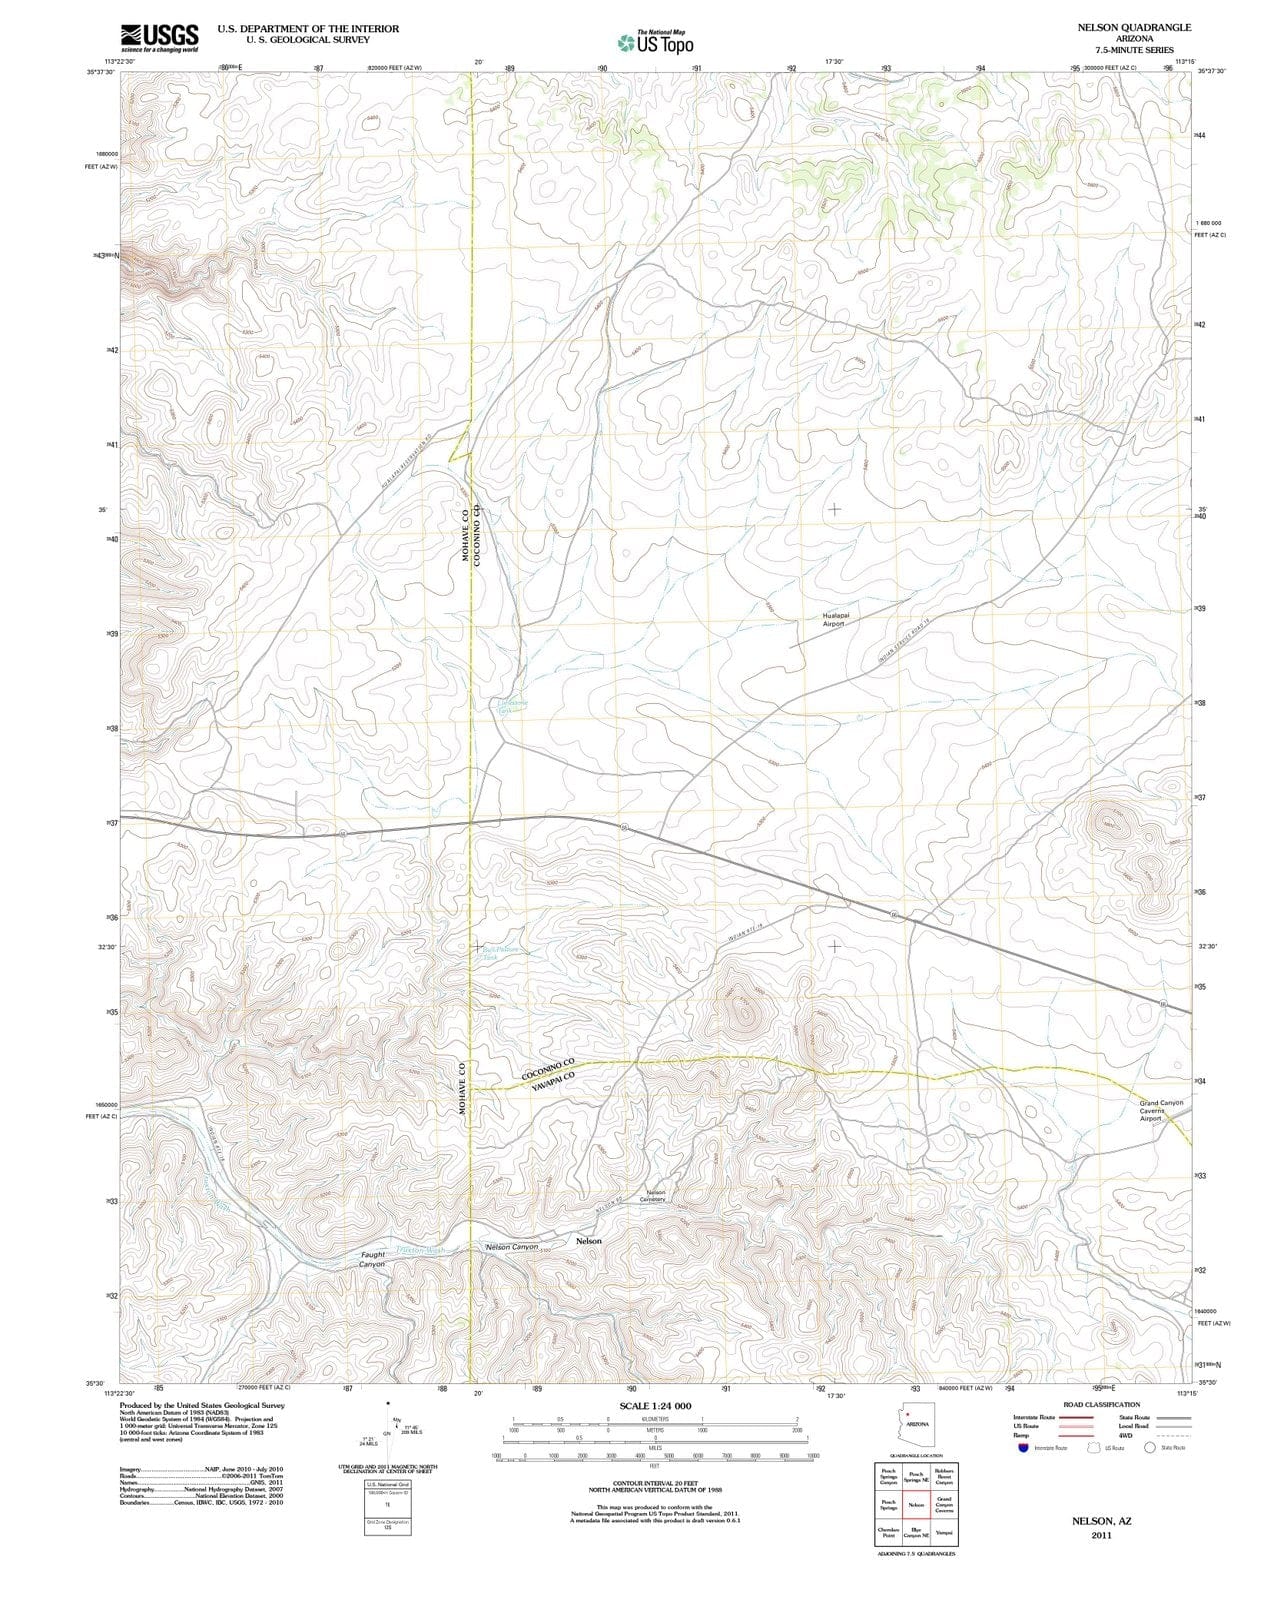 2011 Nelson, AZ - Arizona - USGS Topographic Map